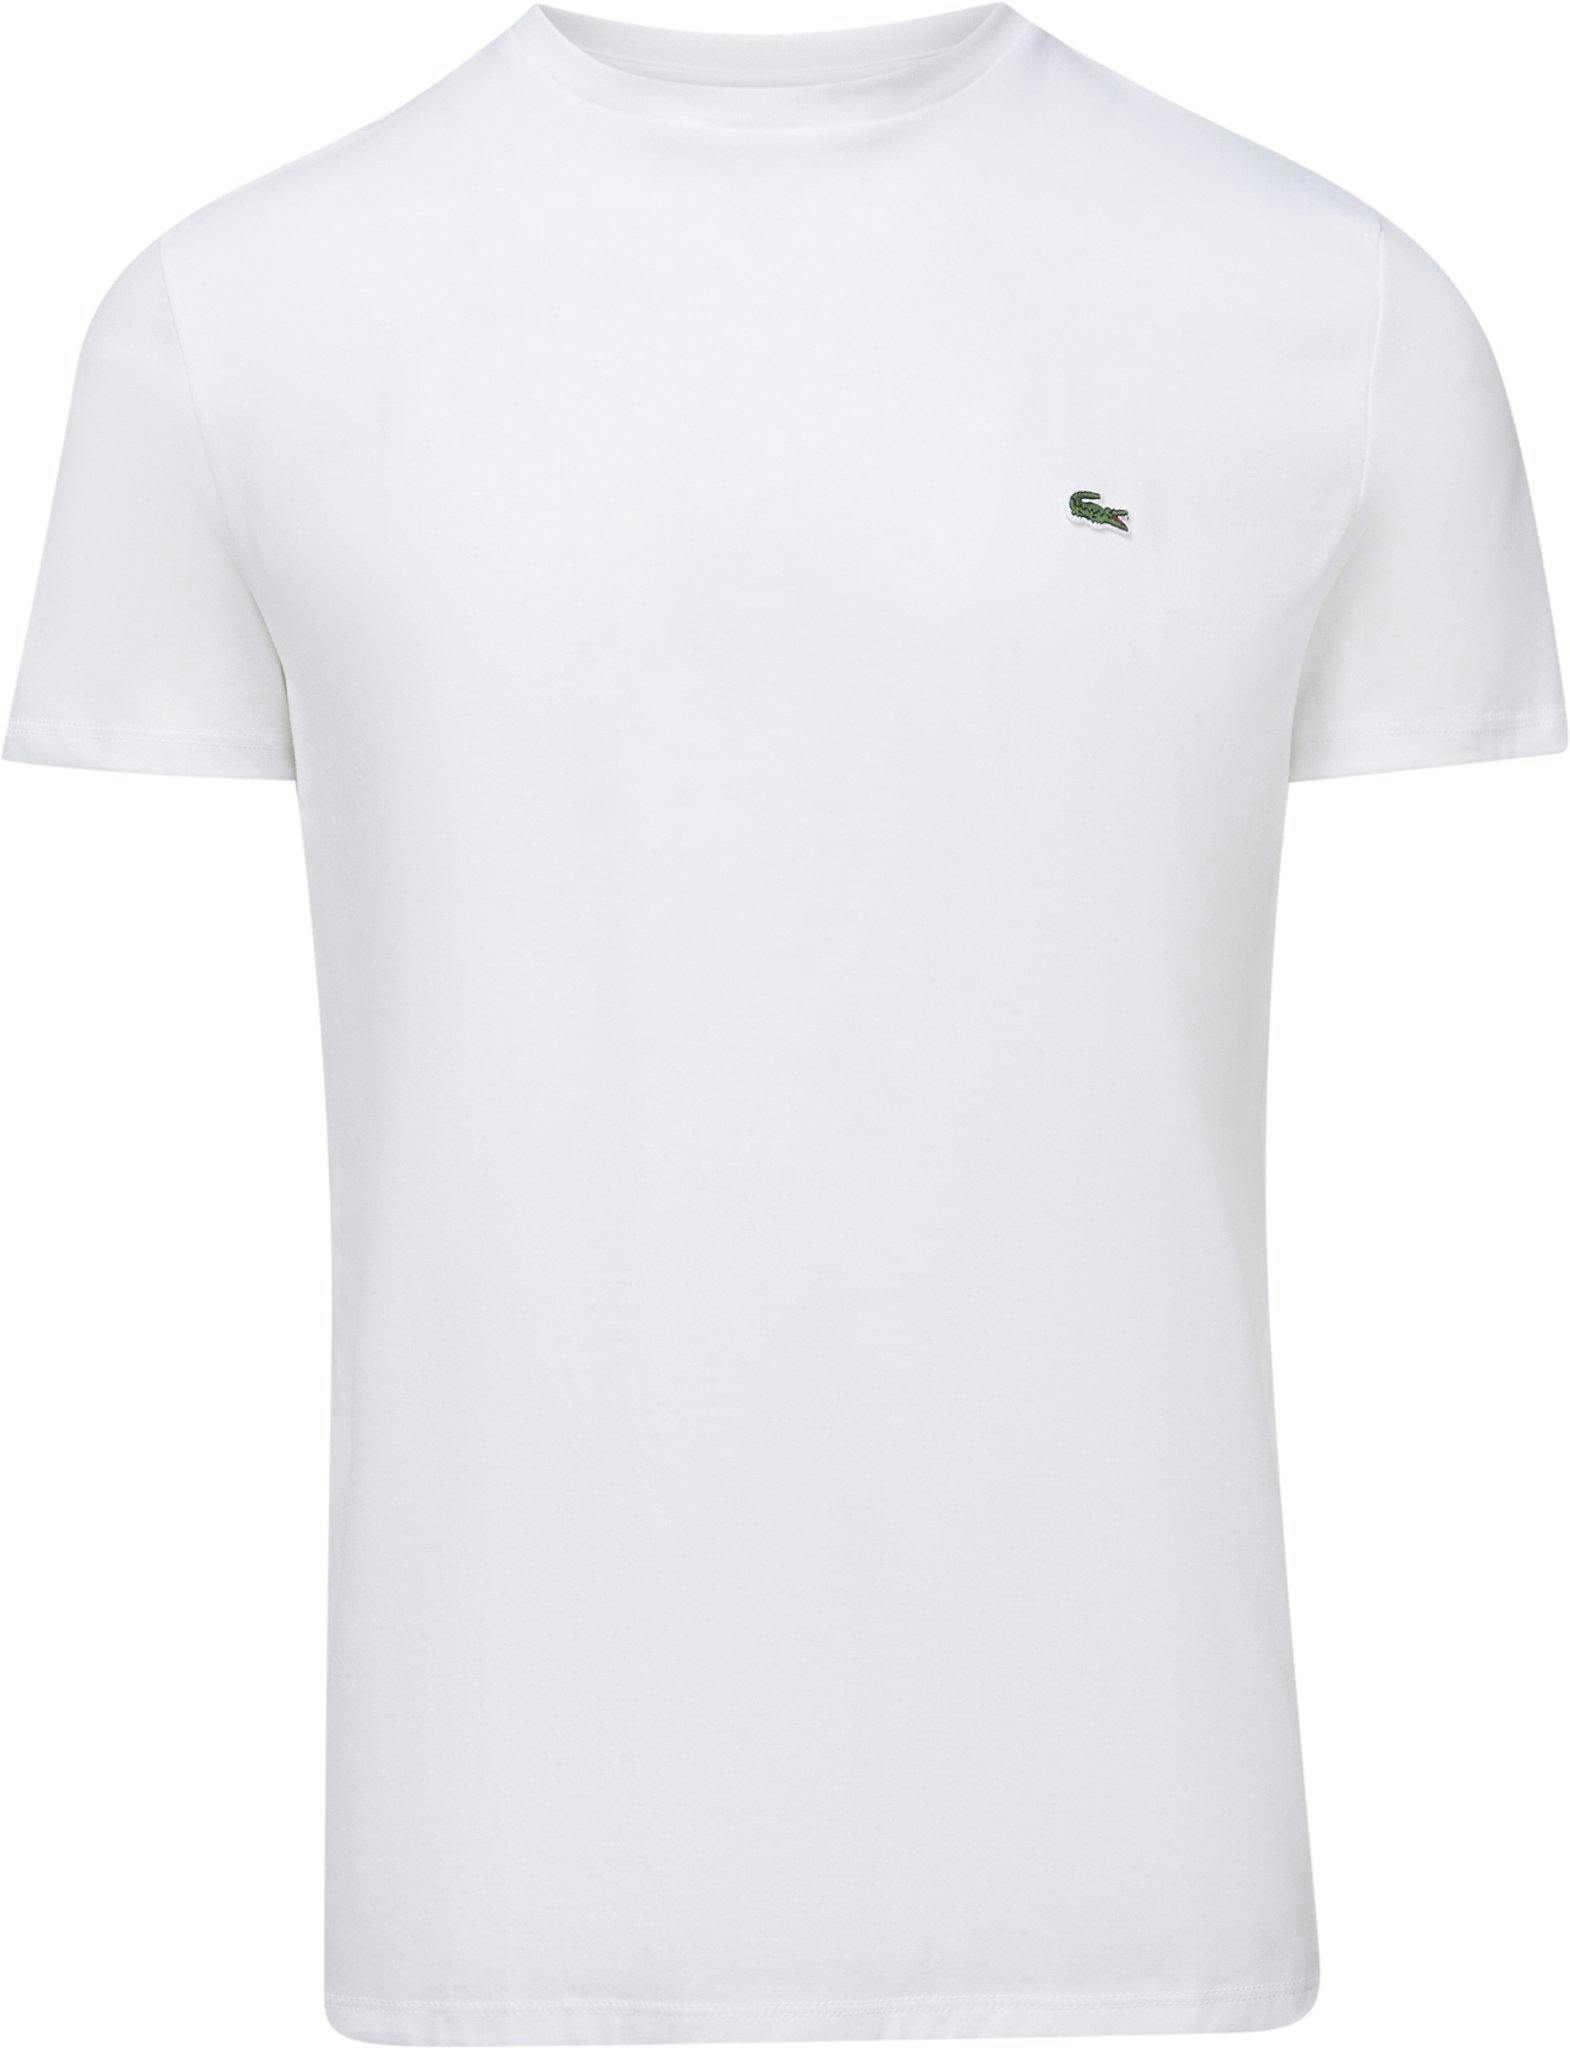 Product image for Crew Neck Pima Cotton T-Shirt - Men's